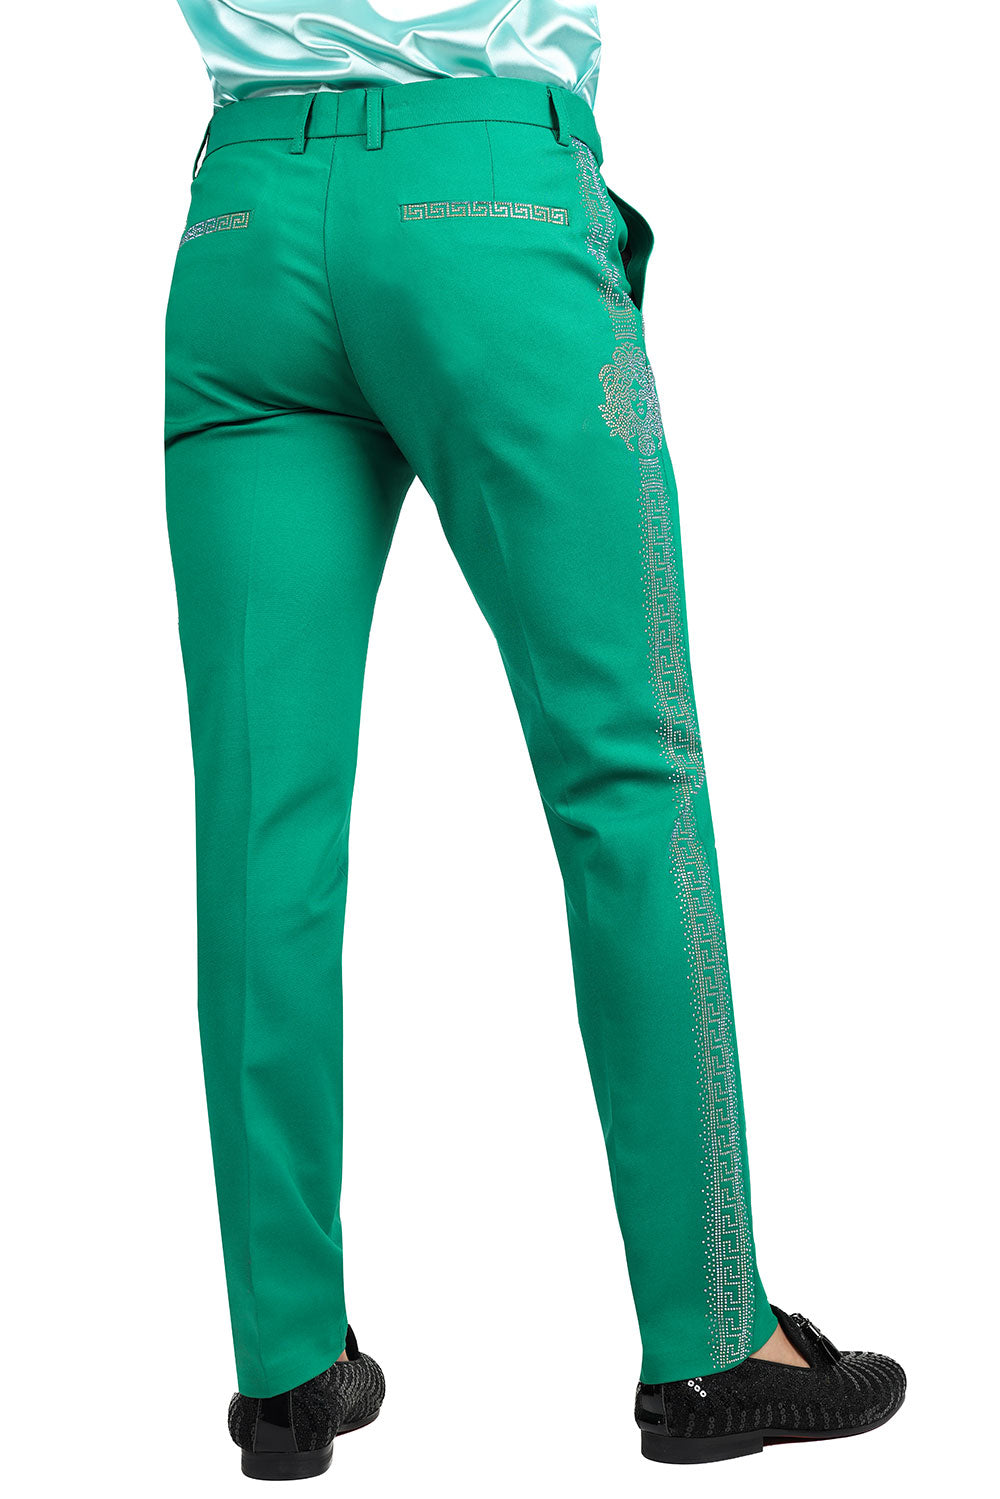 Barabas Men's Medusa Greek Key Pattern Rhinestone Dress Pants 2CPR12 Green and Green